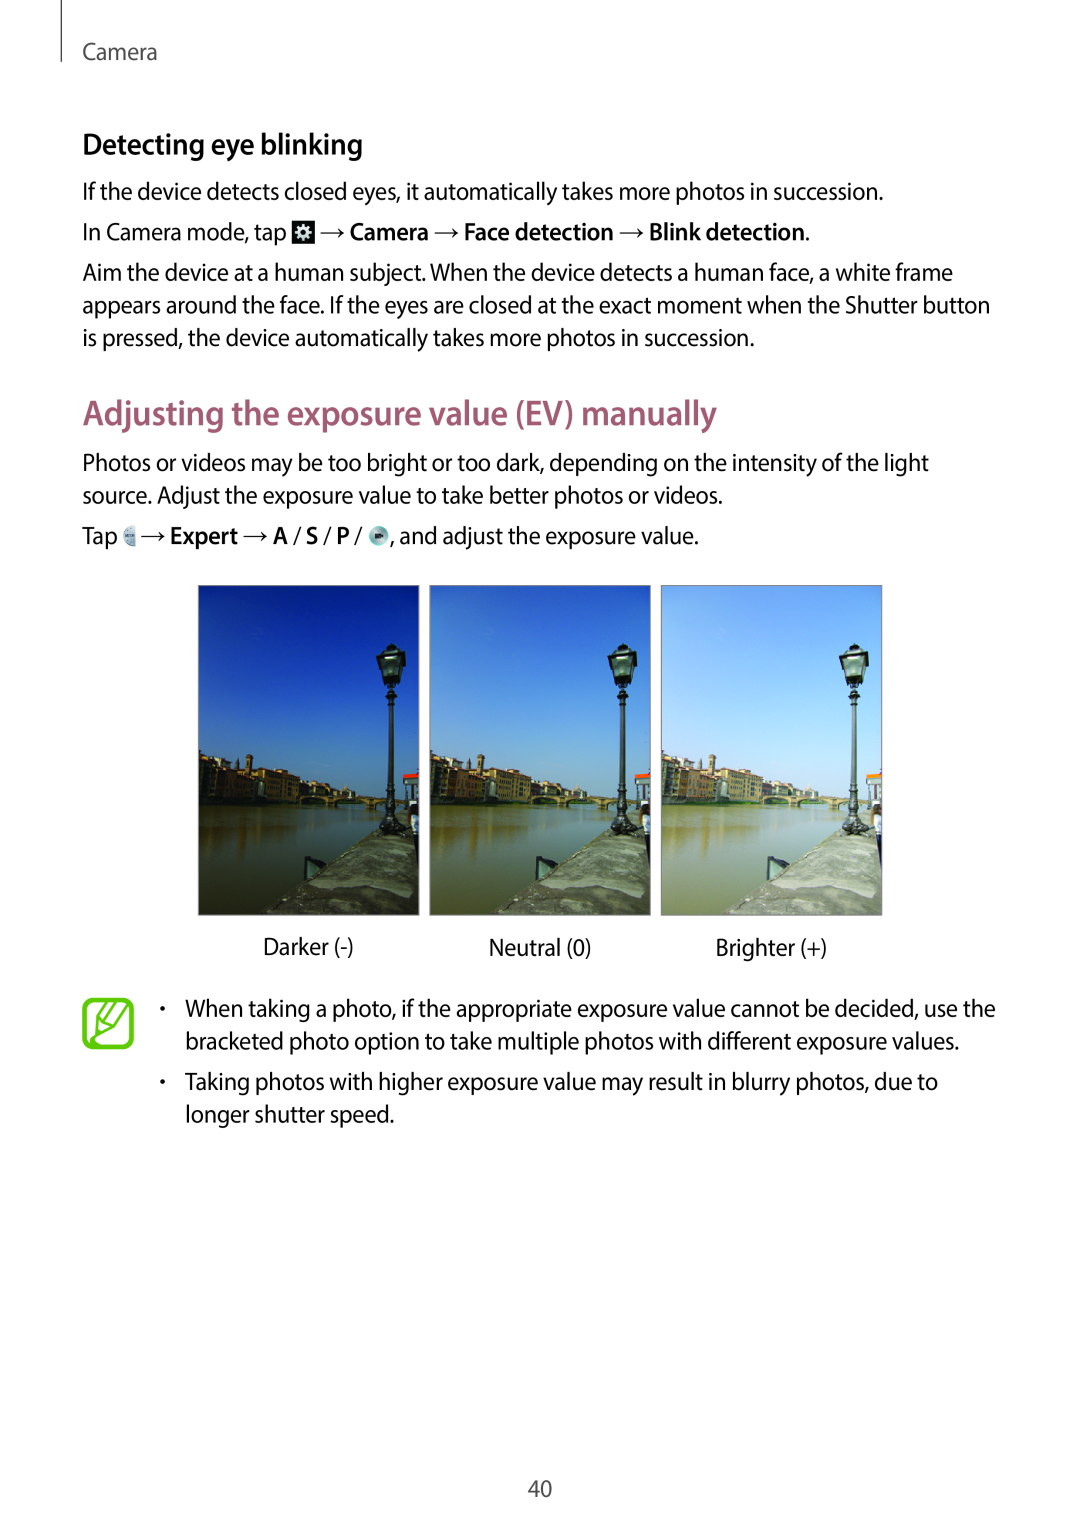 Samsung EK-GC100 user manual Adjusting the exposure value EV manually, Detecting eye blinking, Camera 